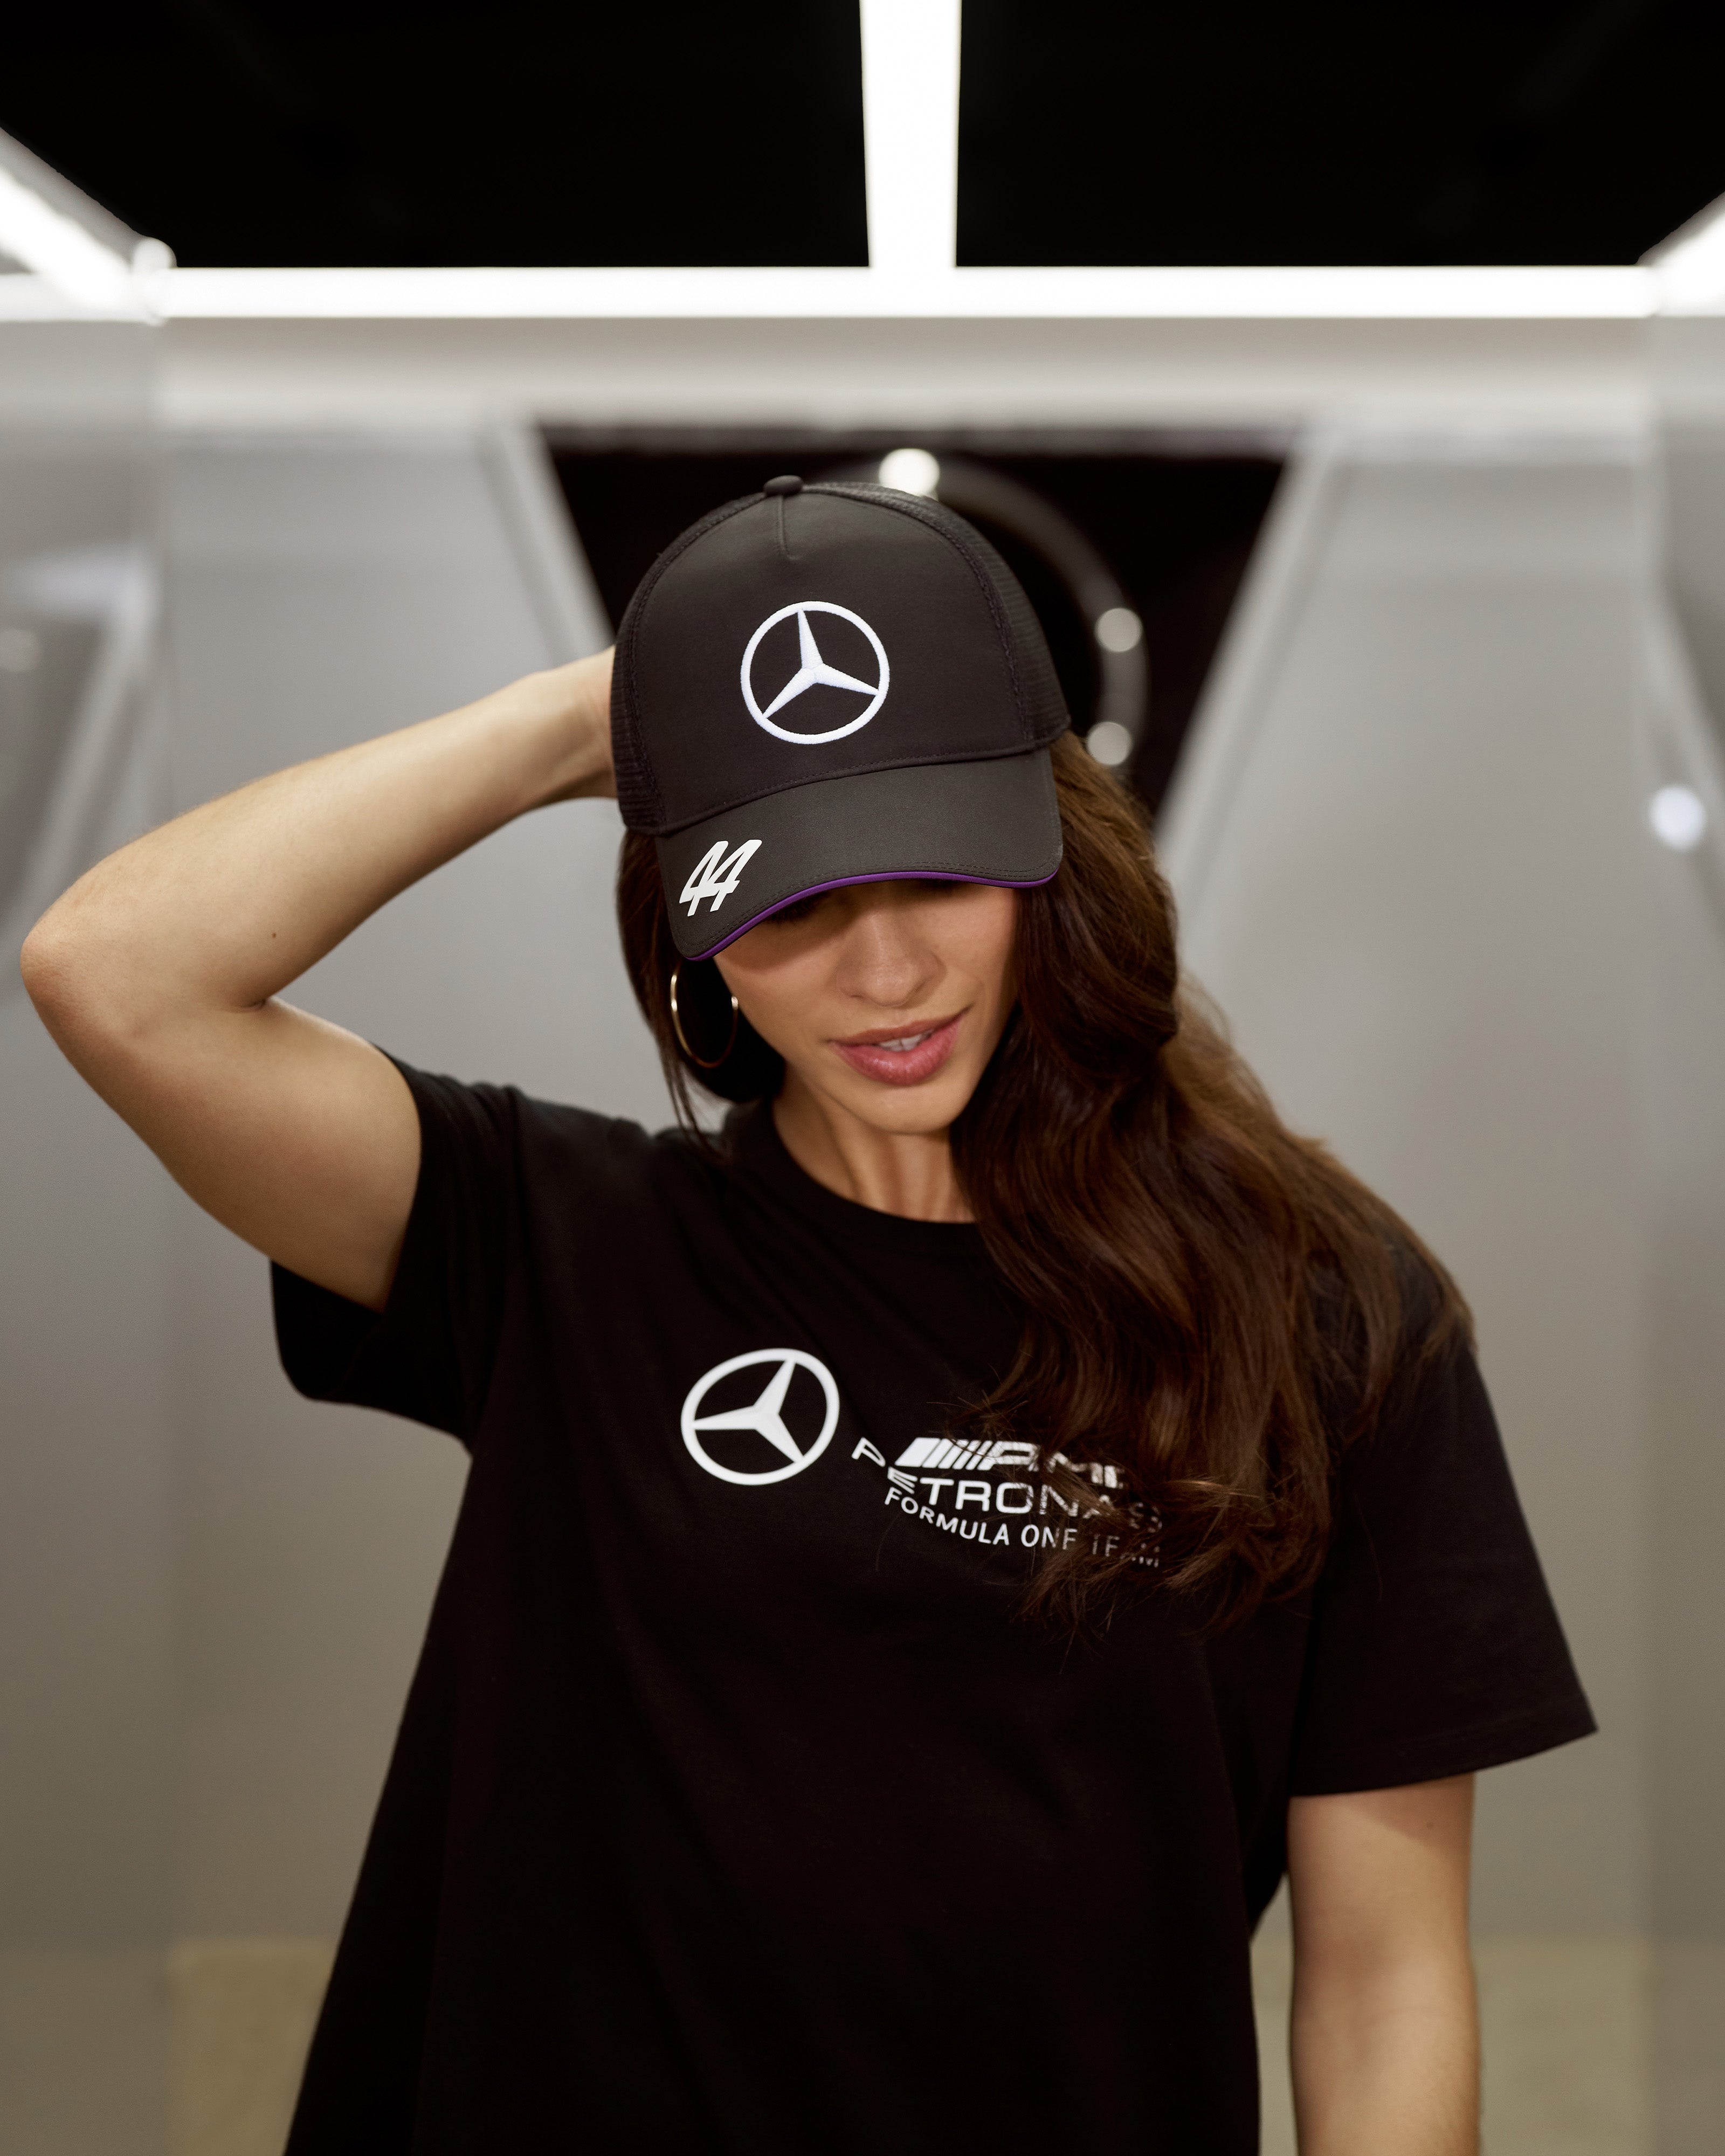 Lewis Hamilton 2024 Team Driver Trucker Cap Black